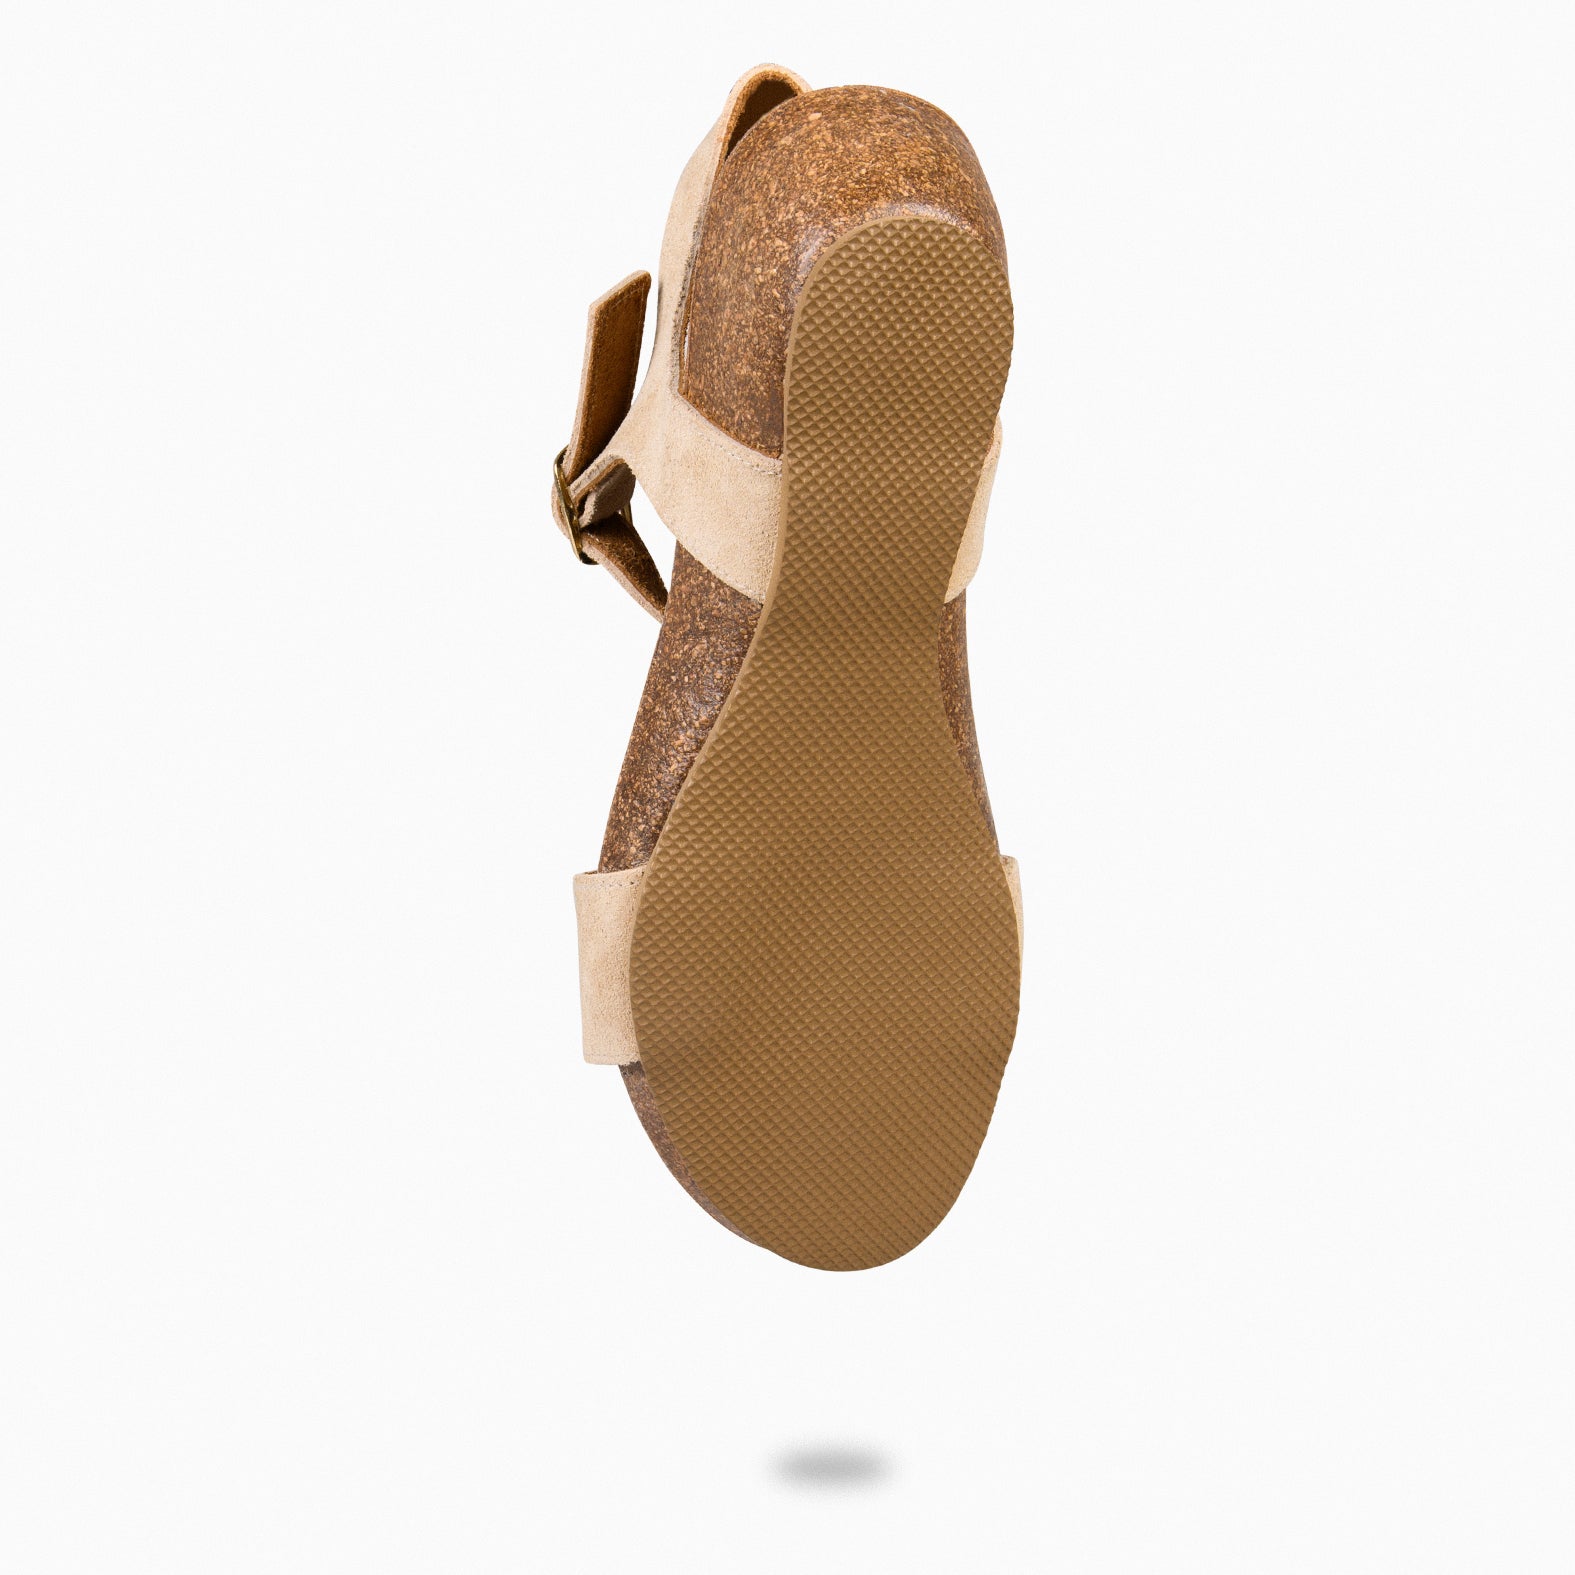 OAK - BEIGE BIO Suede wedge sandals 